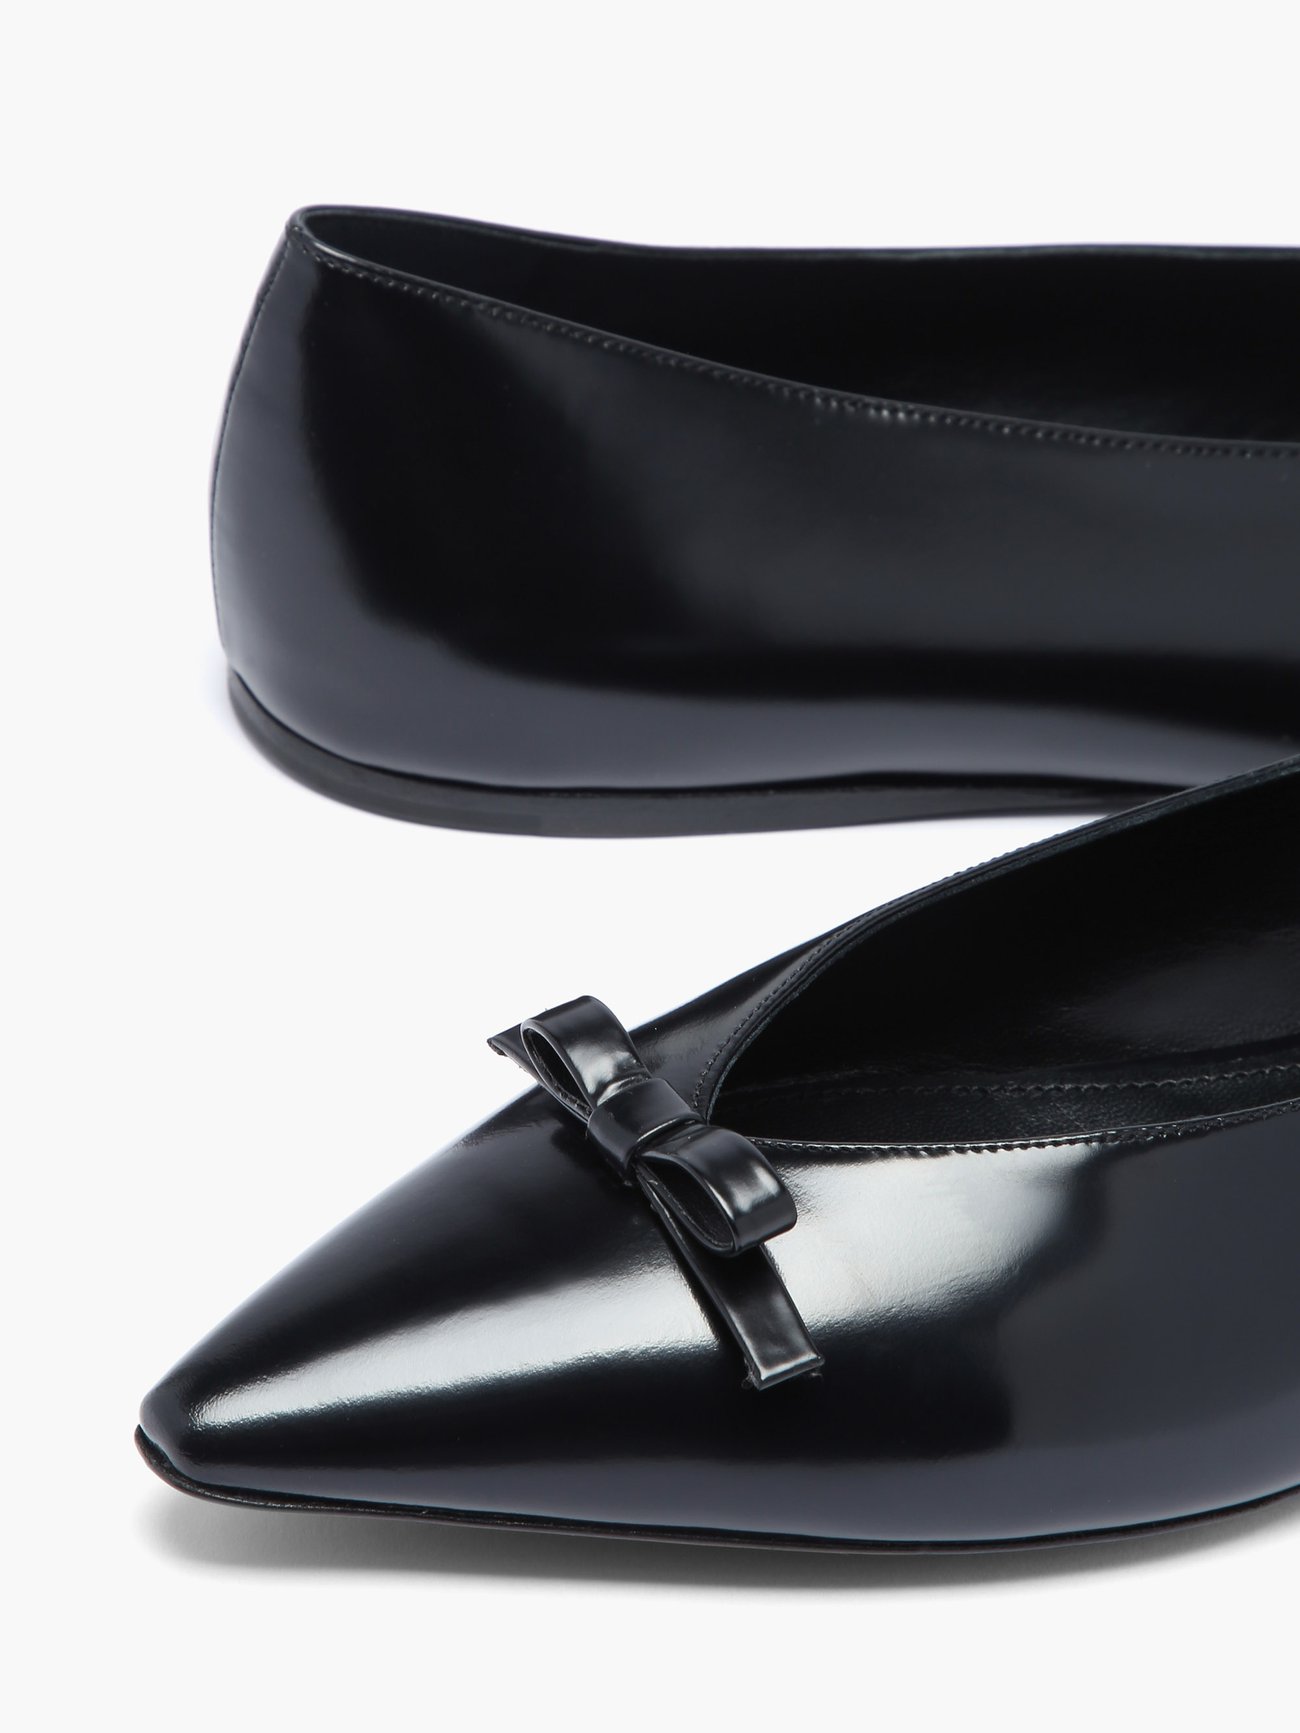 Prada Black Bow Flats Black Patent Leather